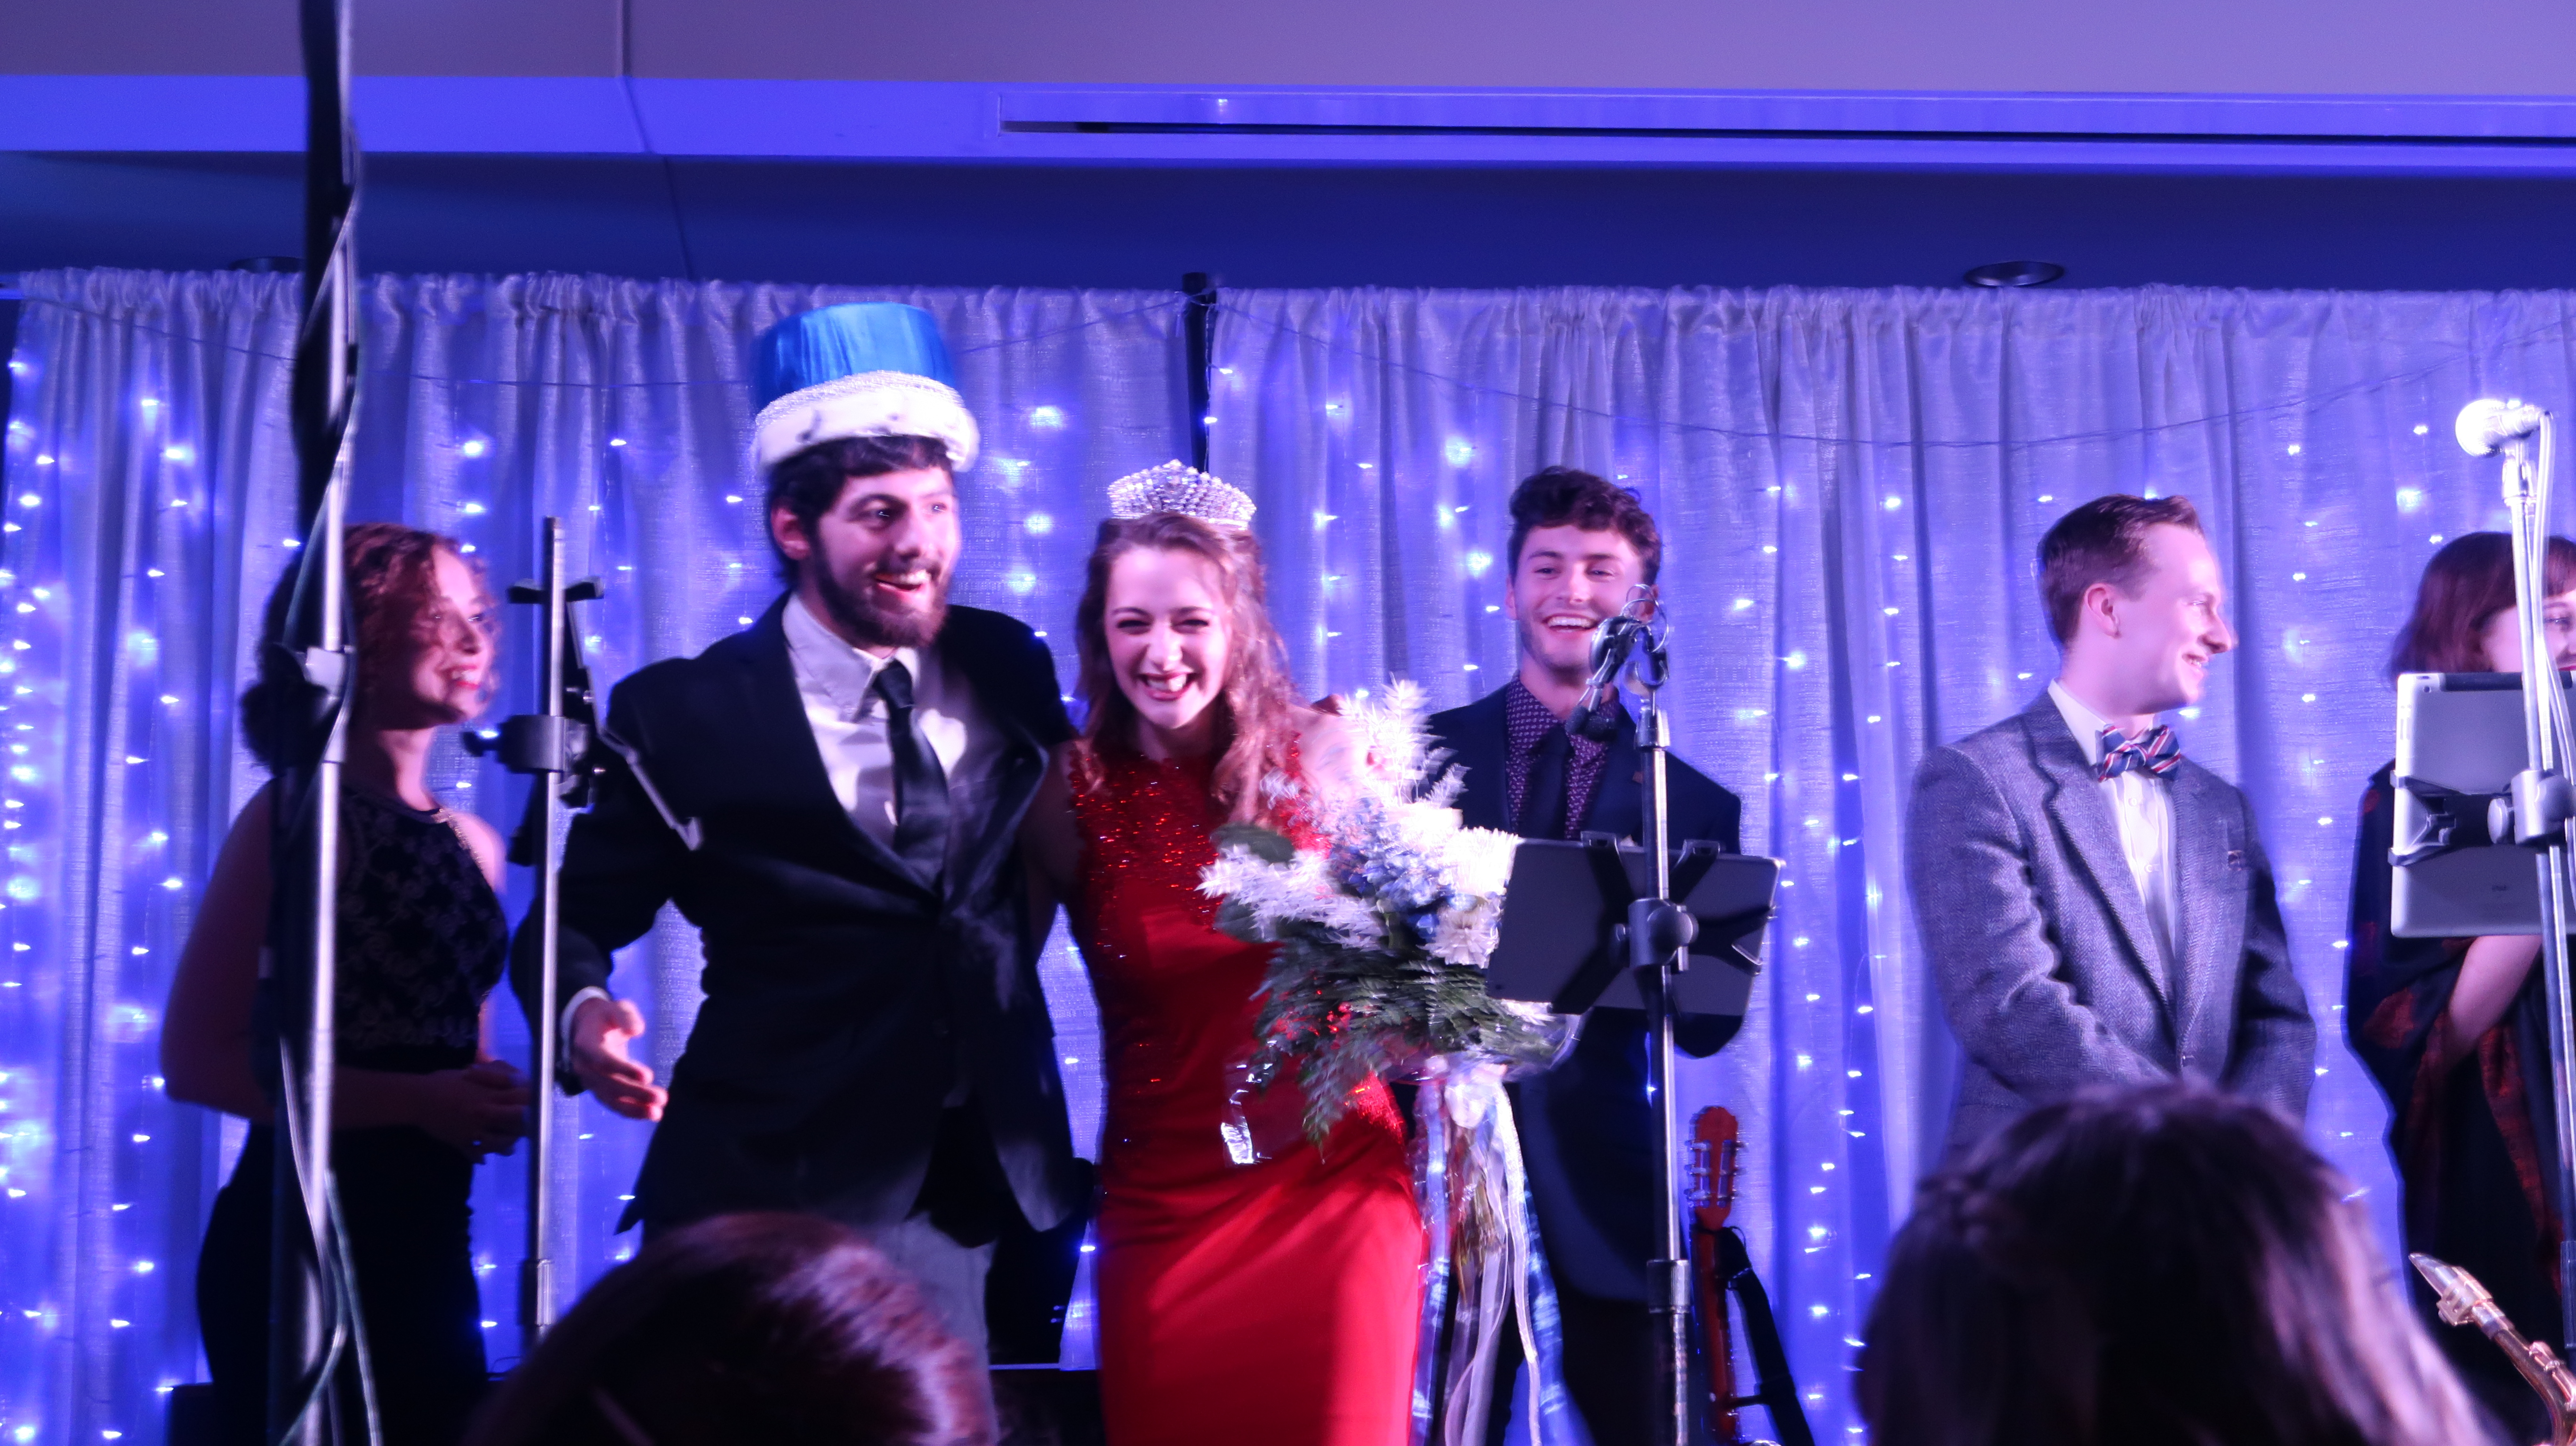 Arnn crowns Reid and Balsbaugh at Prez Ball